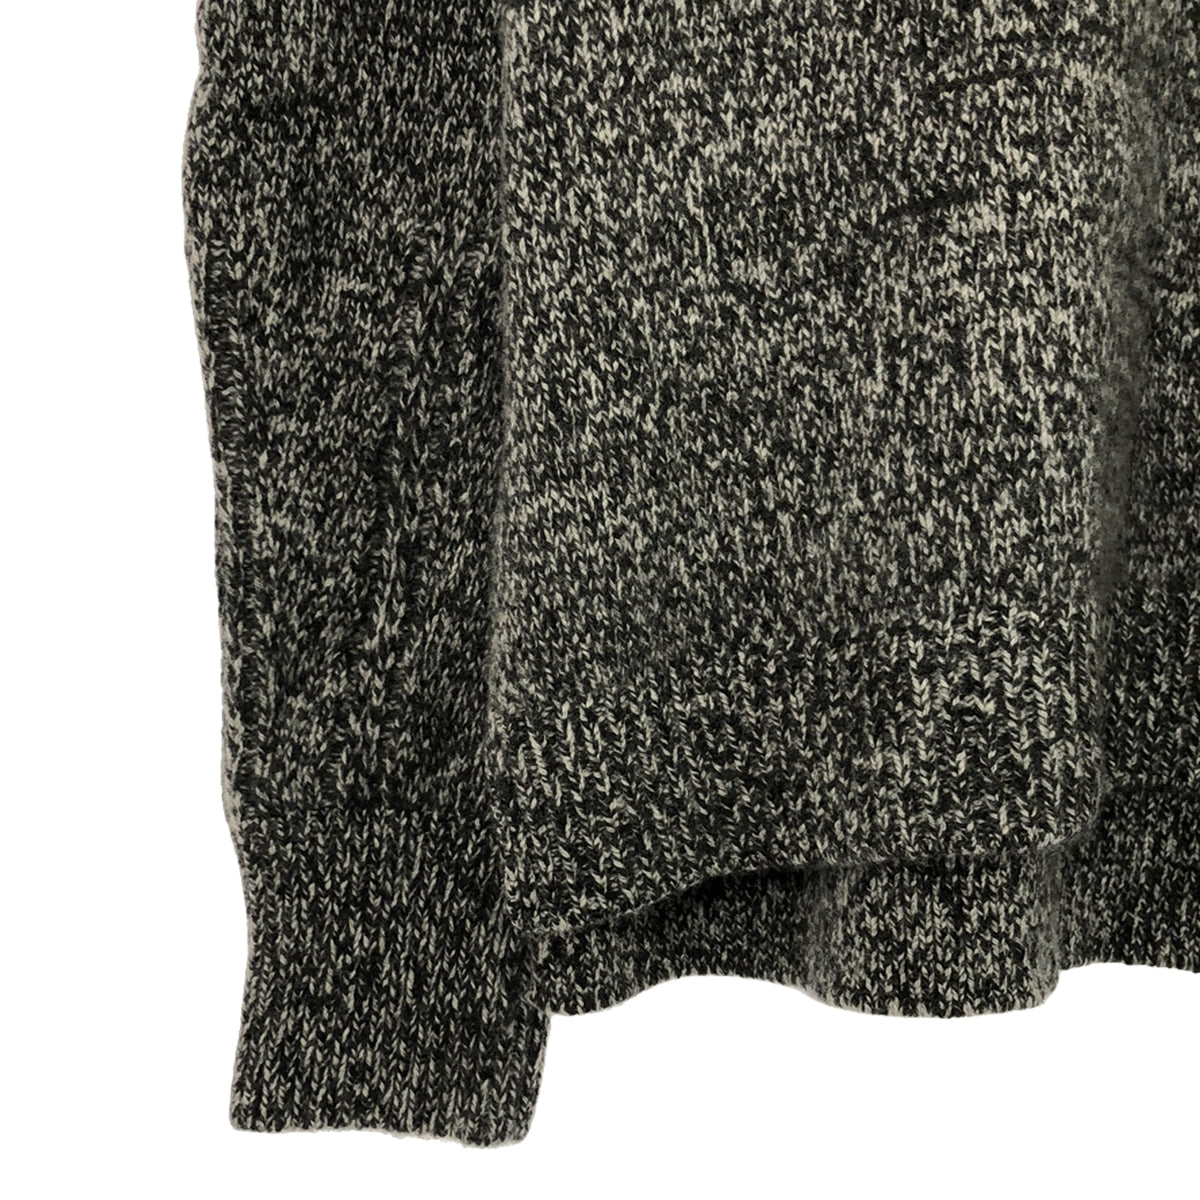 Mame Kurogouchi / マメクロゴウチ | wool cashmere brushed roll neck knitted top / カシミヤ シルク ニットプルオーバー | 1 | レディース